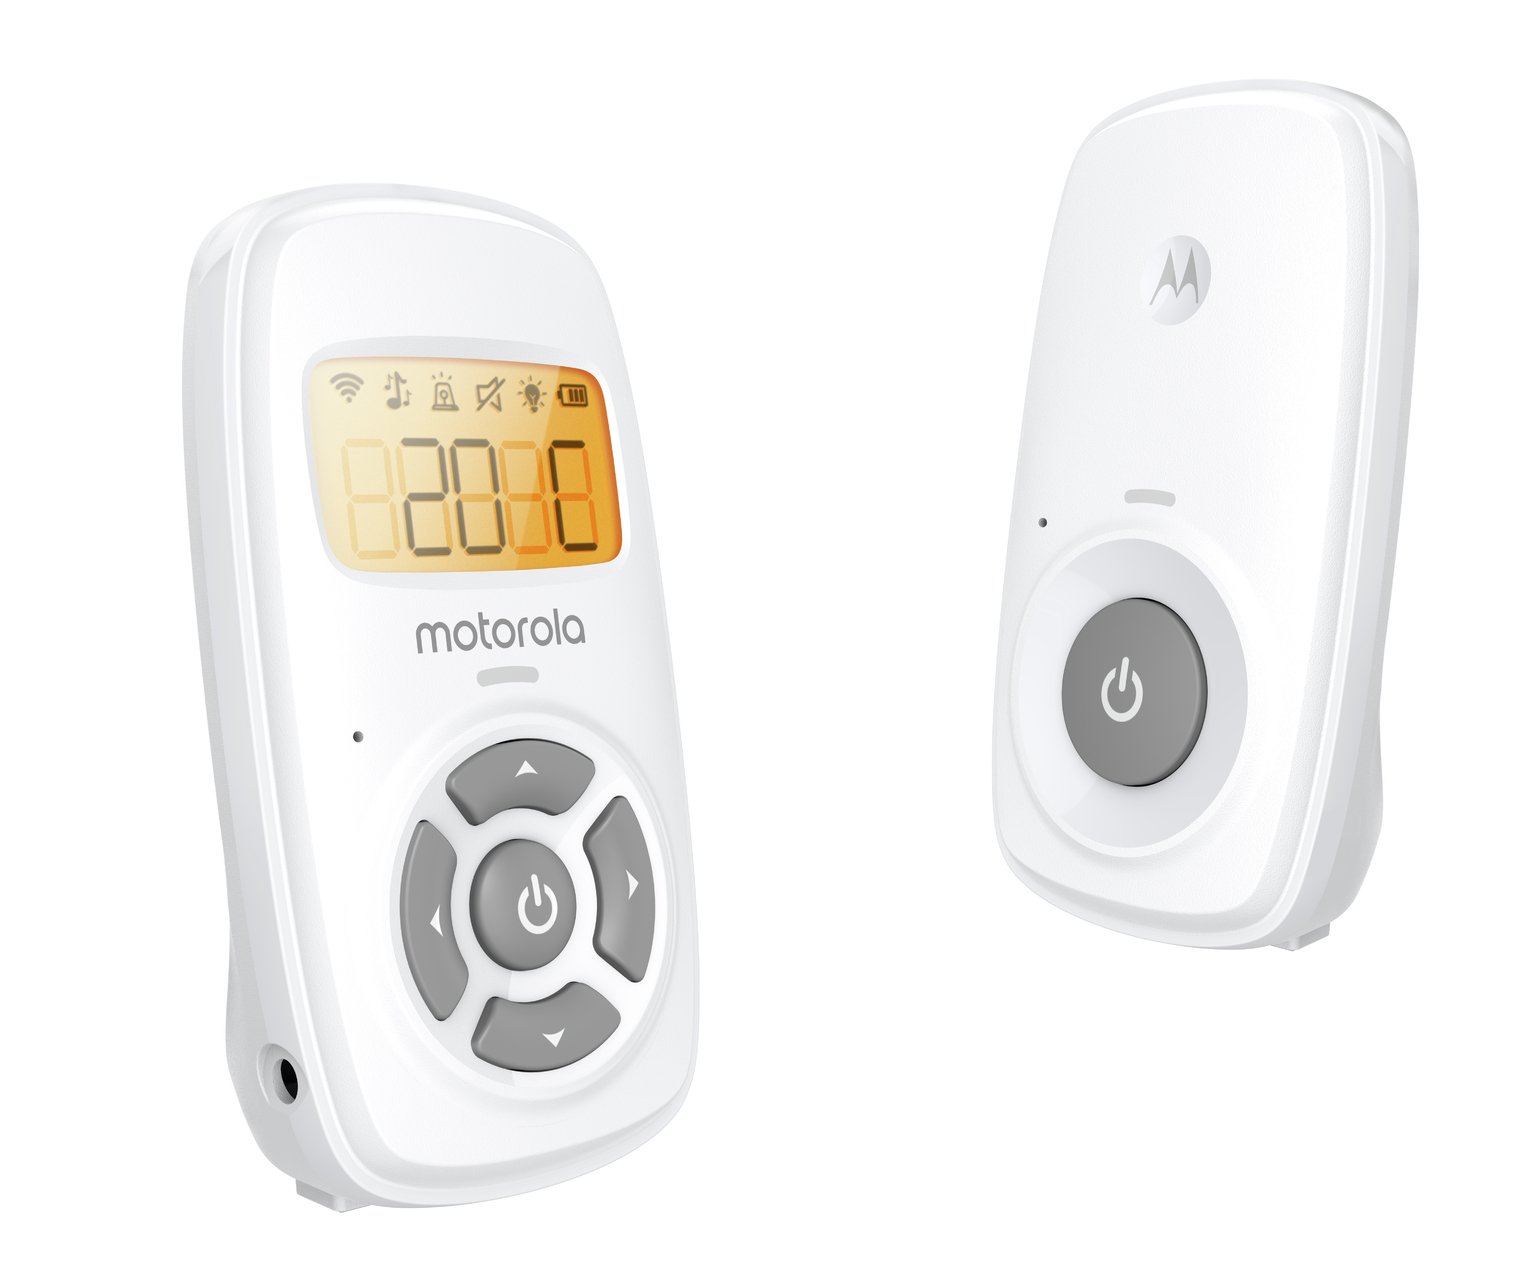 Motorola MBP24 Digital Baby Monitor Review